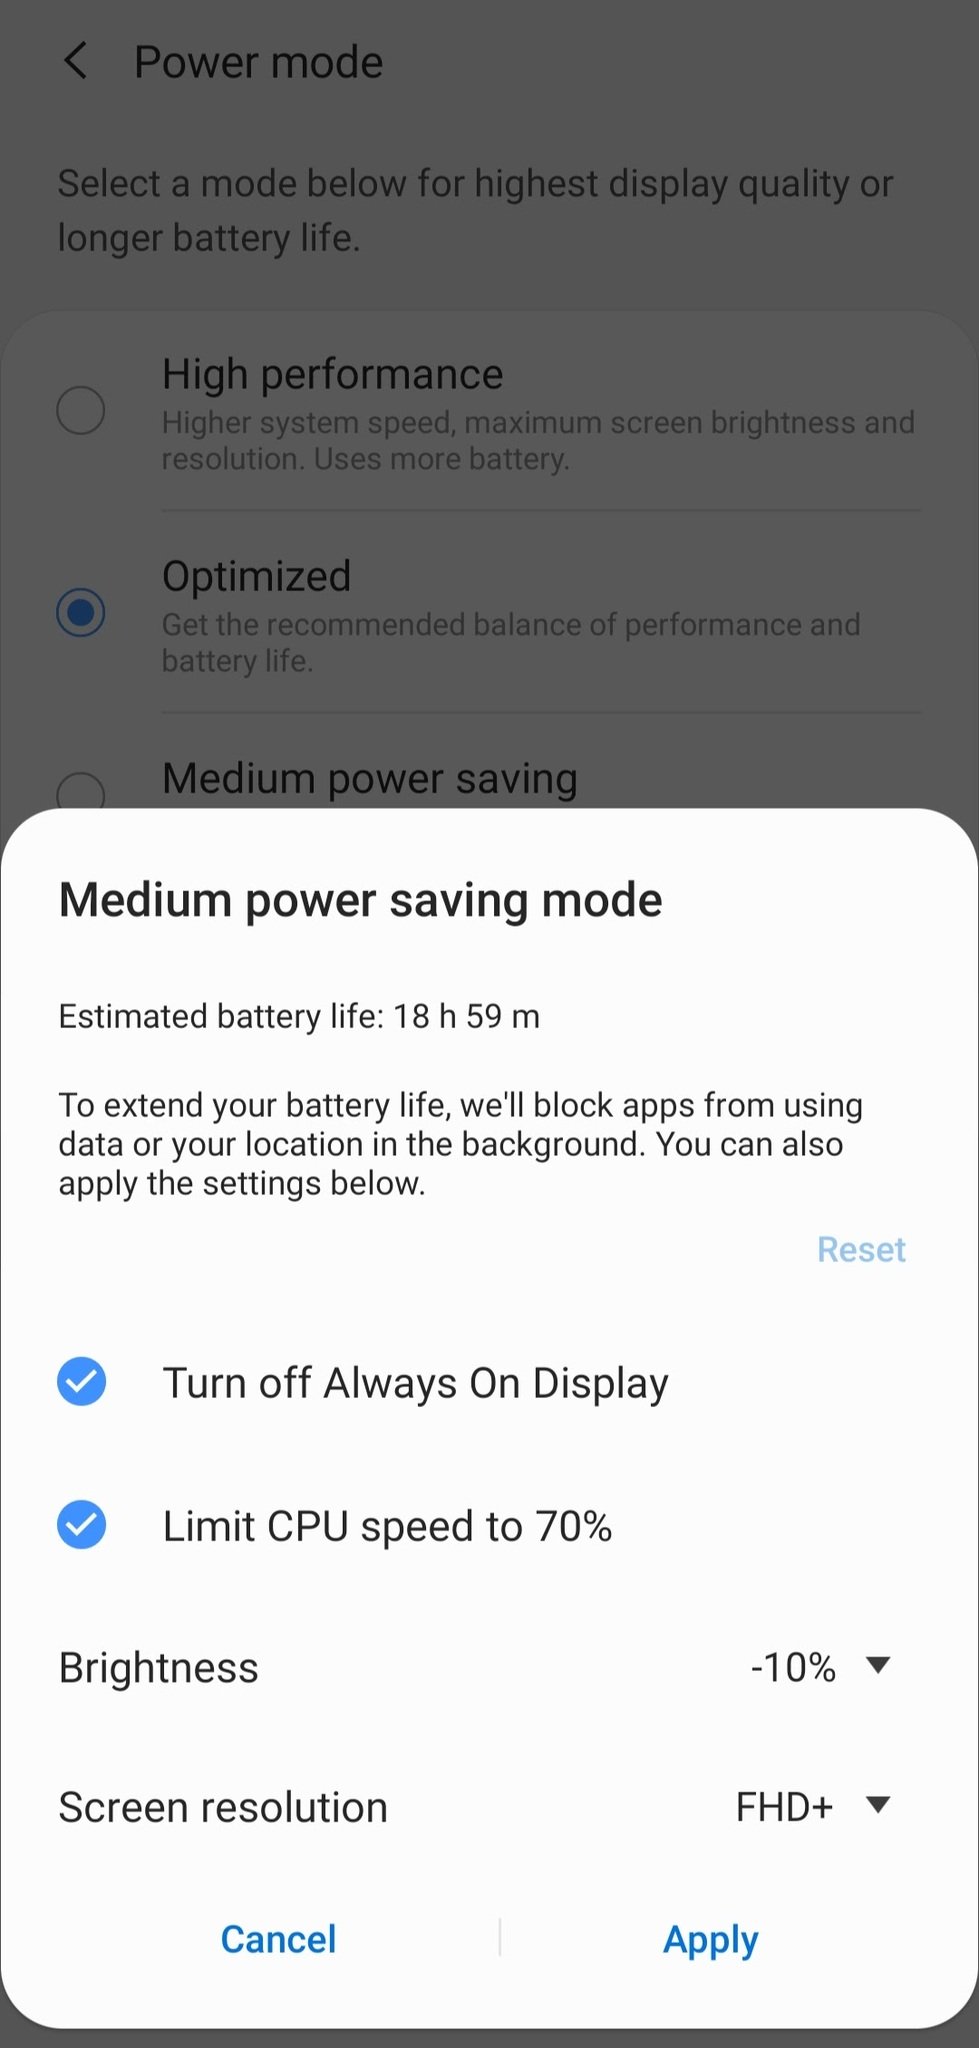 Galaxy S20 Ultra power saving mode settings